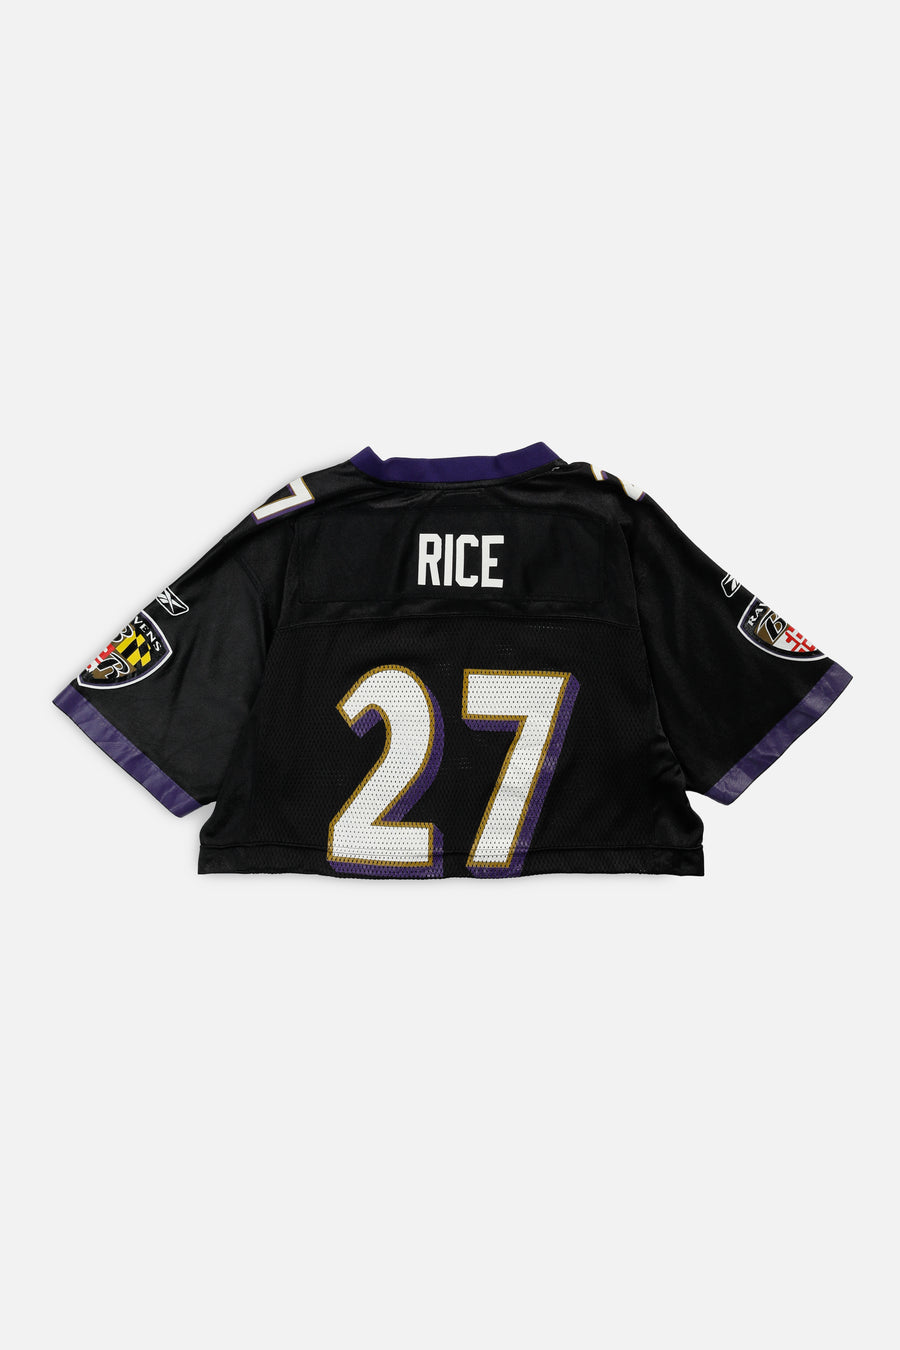 Rework Crop Baltimore Ravens NFL Jersey - S